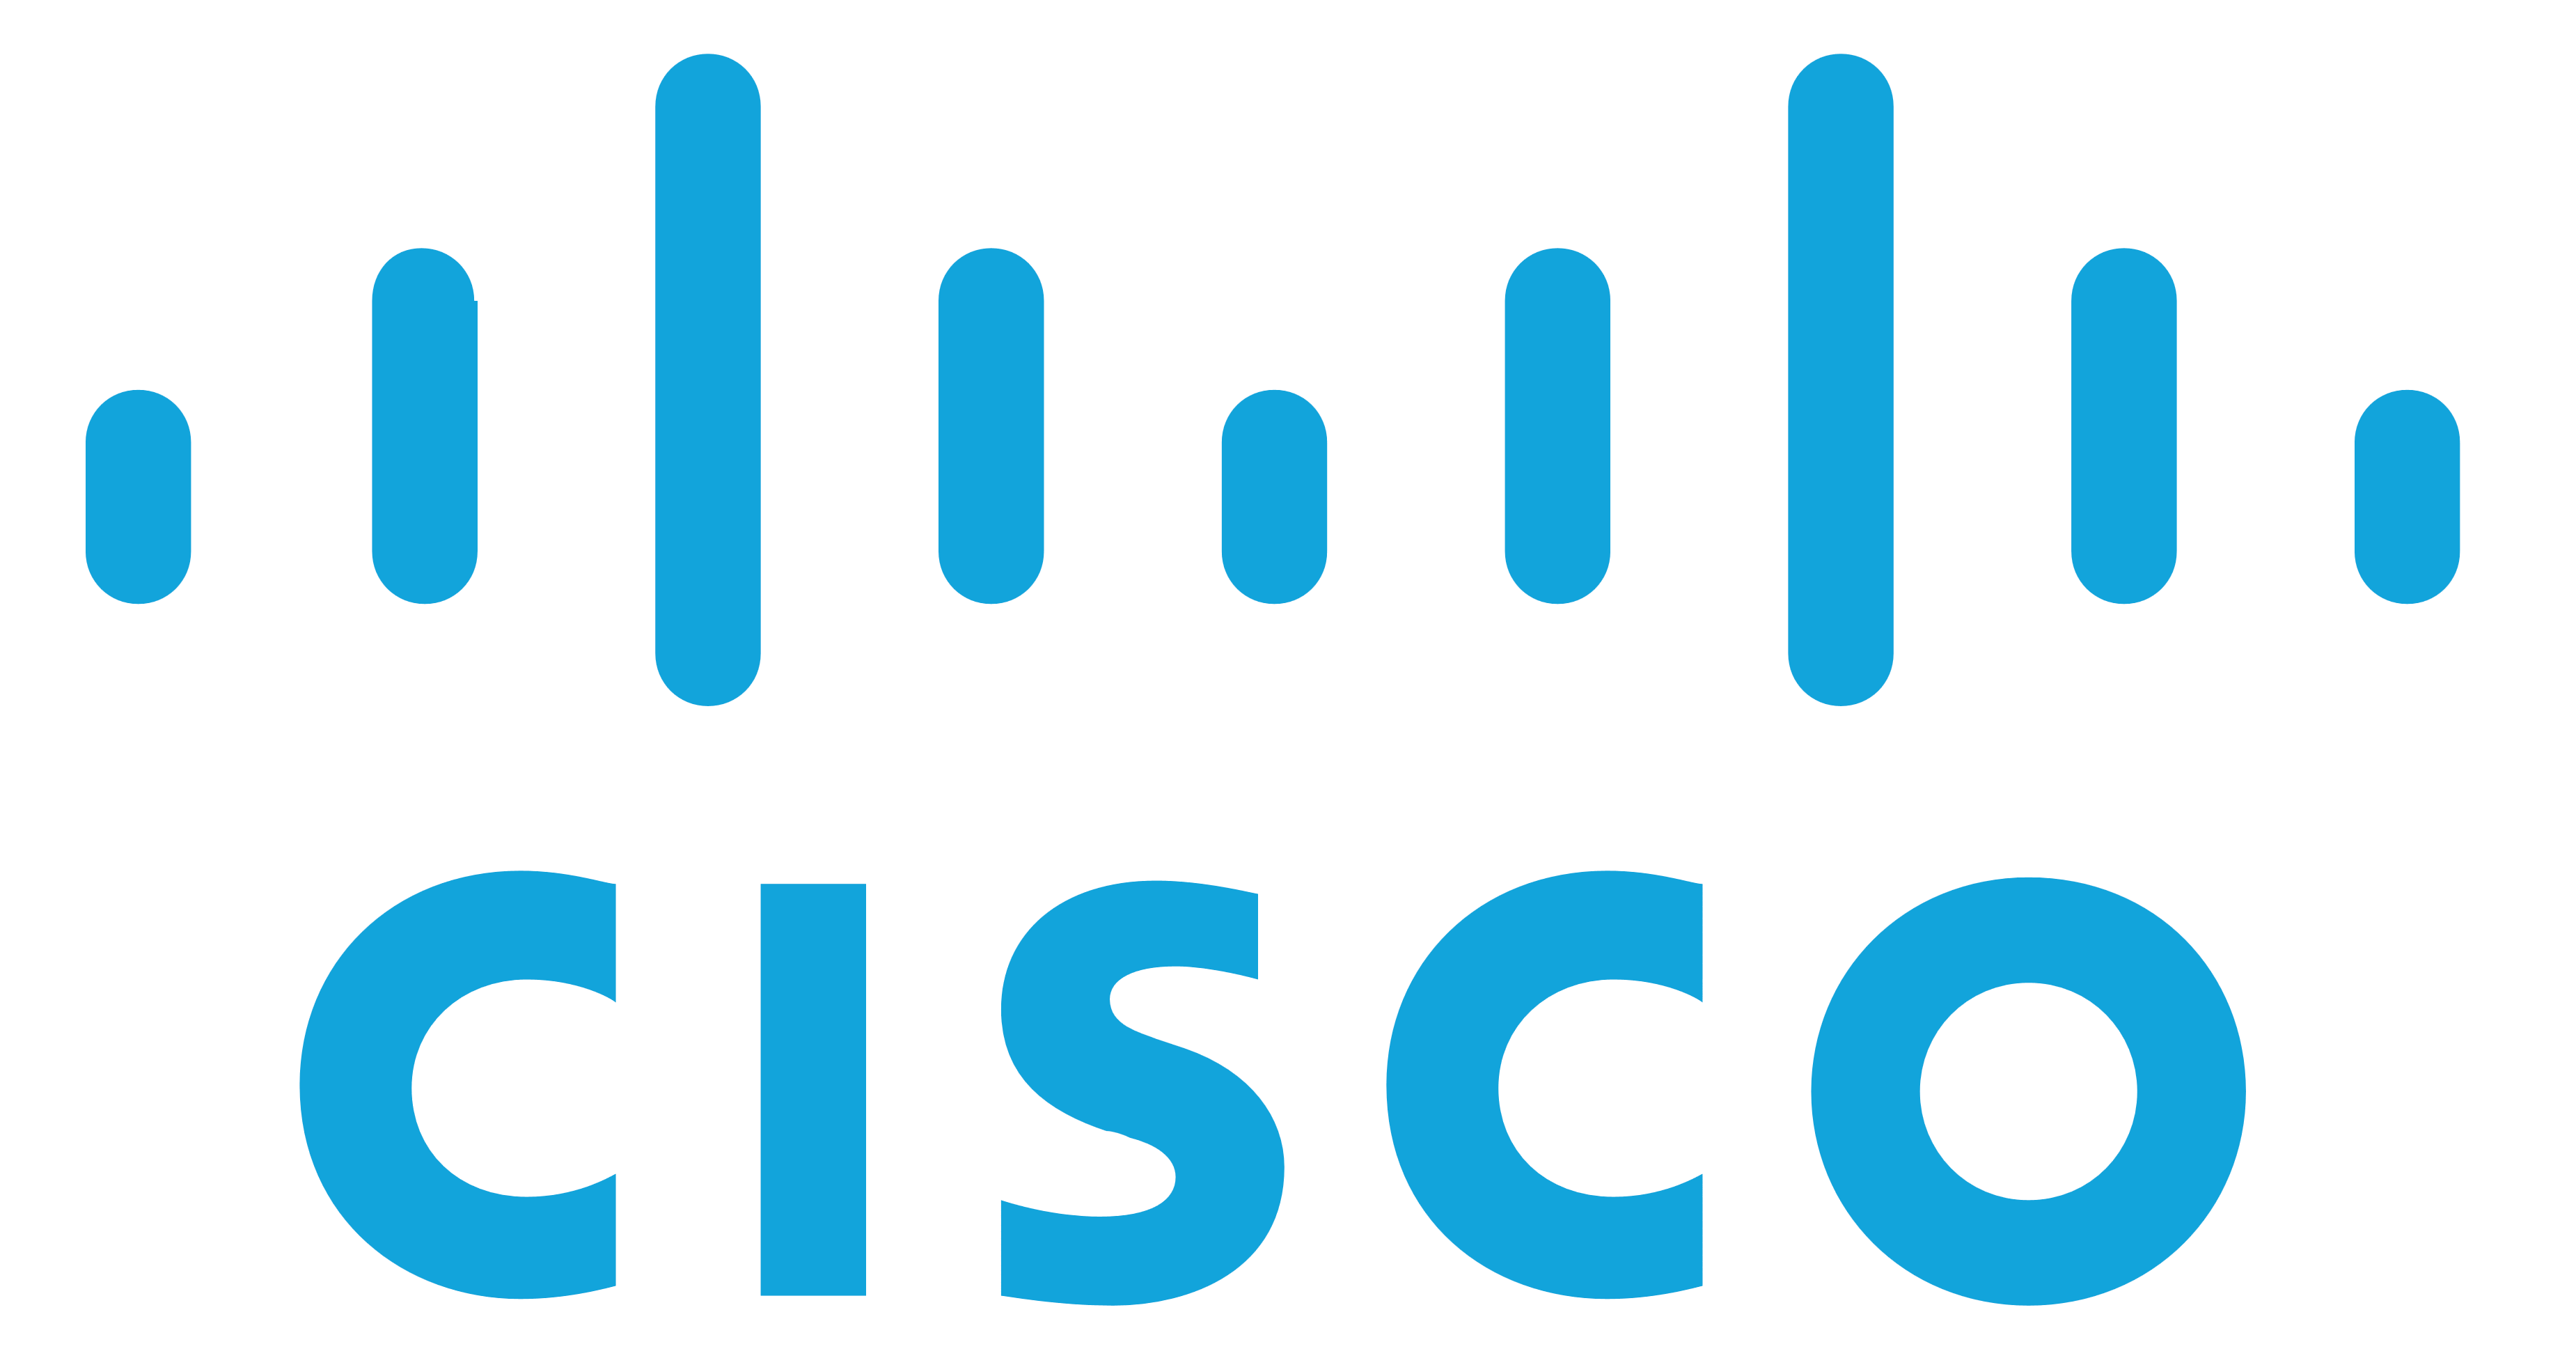 Cisco logo, logotype